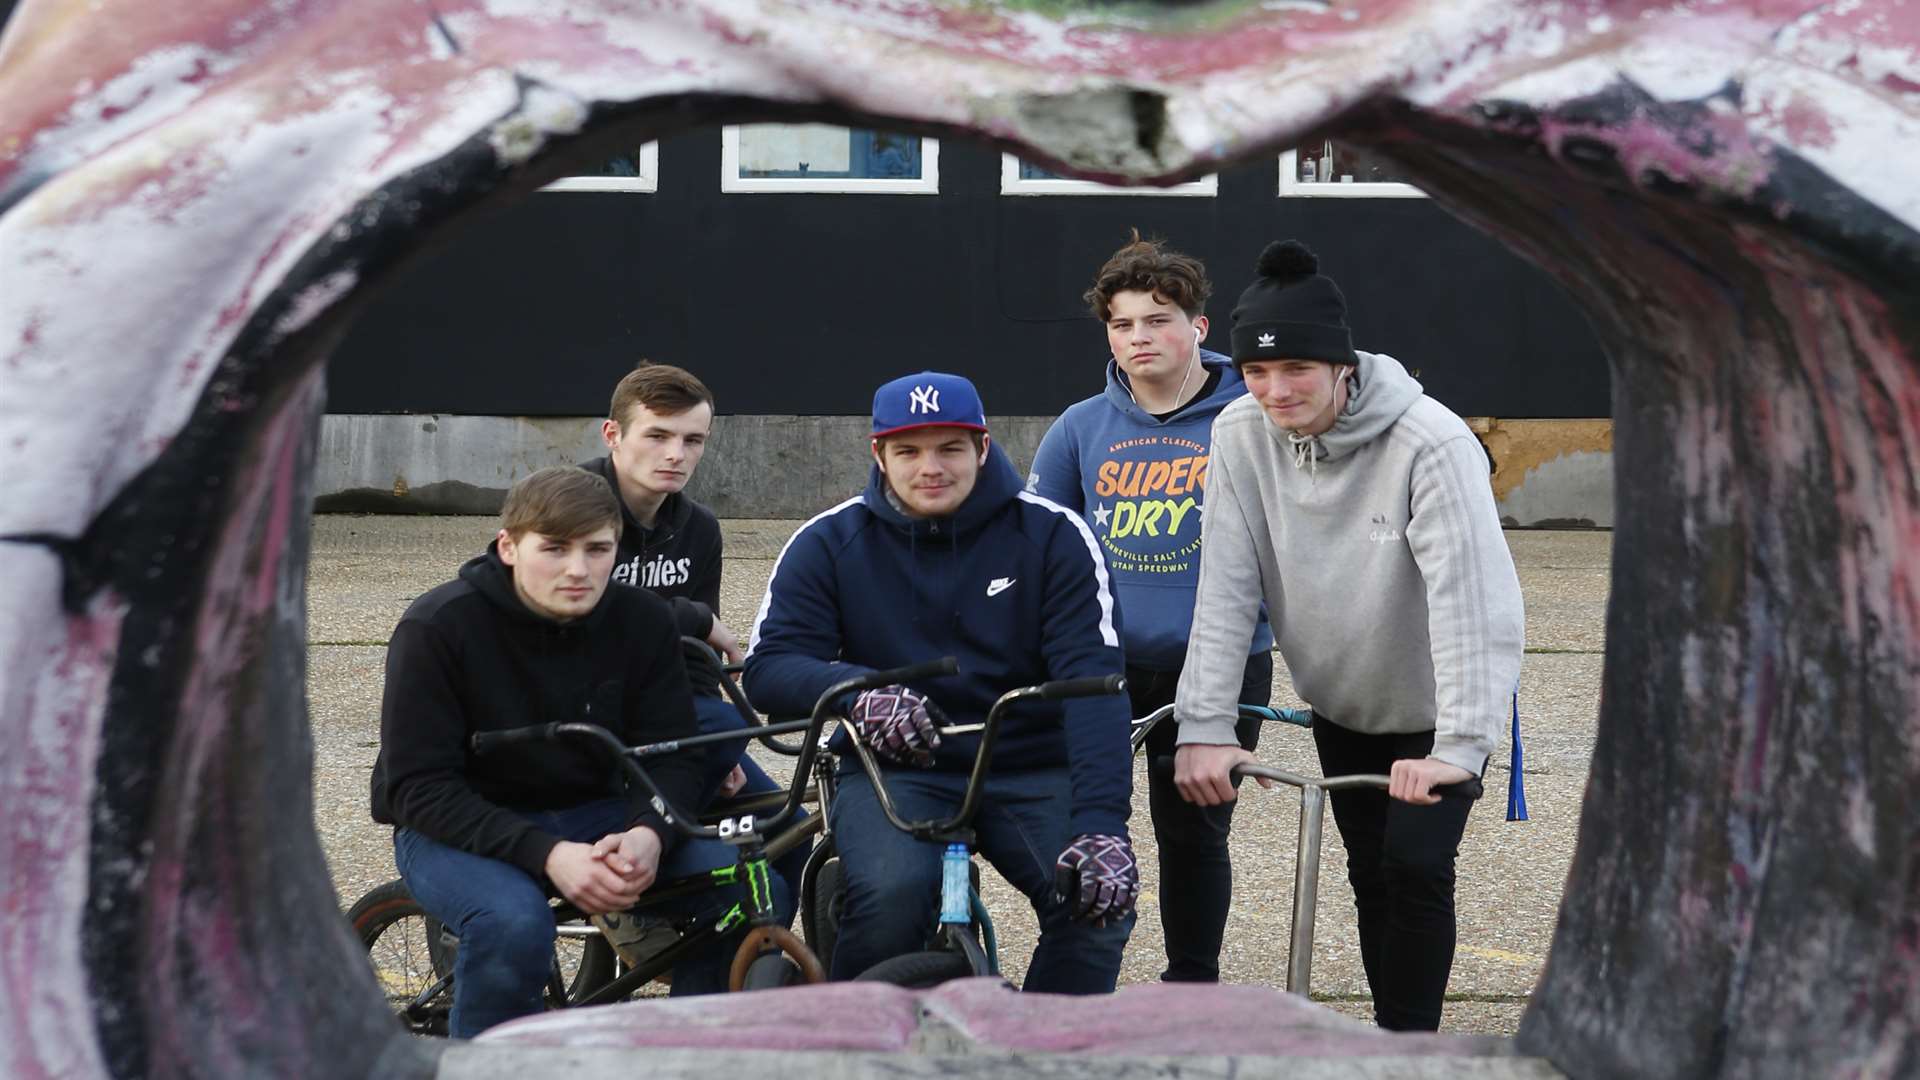 Jordan Manwaring, Ben Bilsborough, Nathan Miles, Kane Supple and Nathan Newton - regular users of the skate park and The Shed